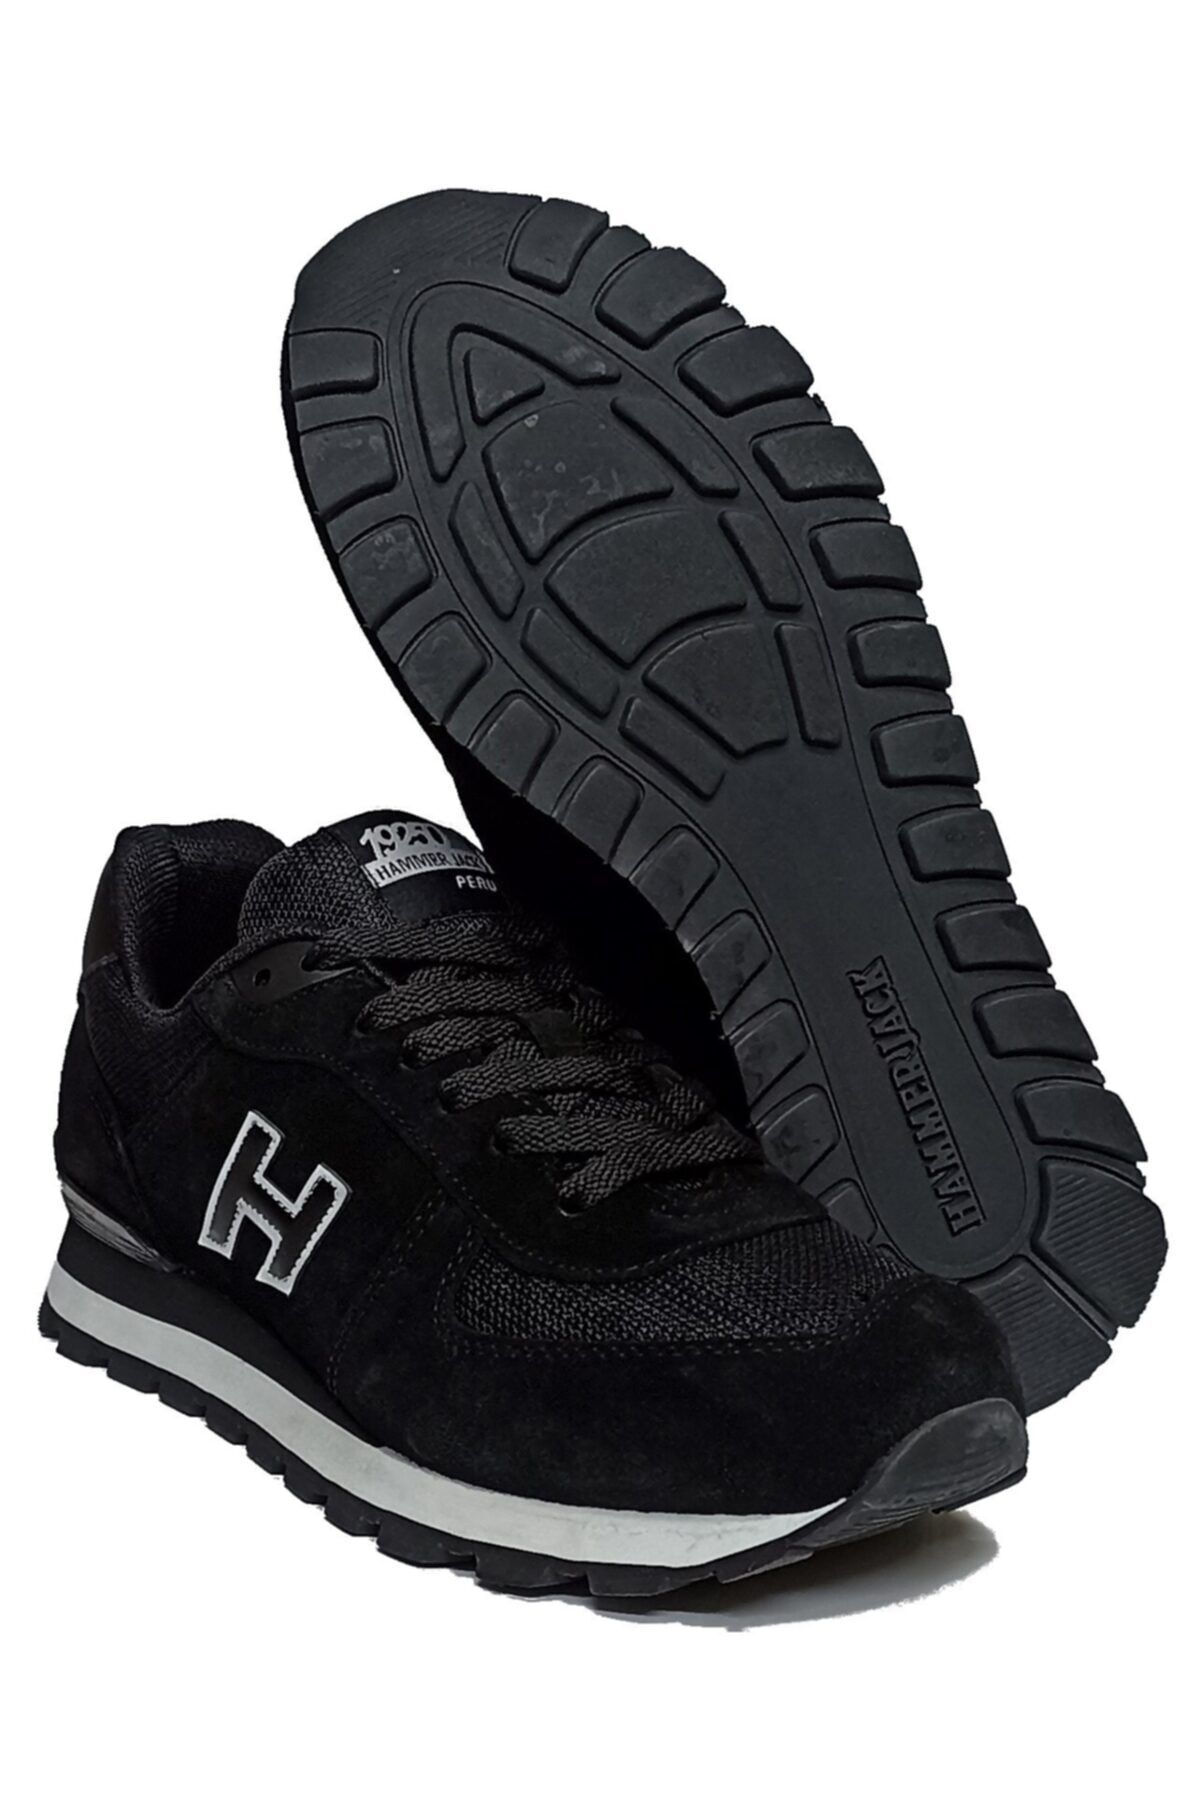 Hammer Jack Siyah - Peru Hakiki Deri Unisex Günlük Sneaker 102 19250